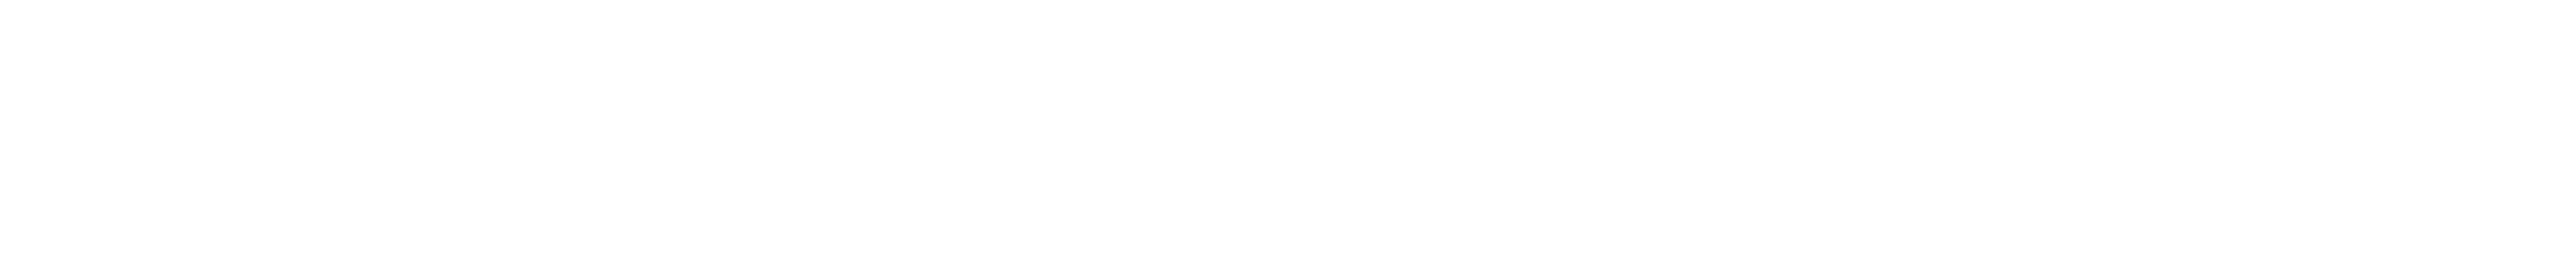 Simple Marketing 365